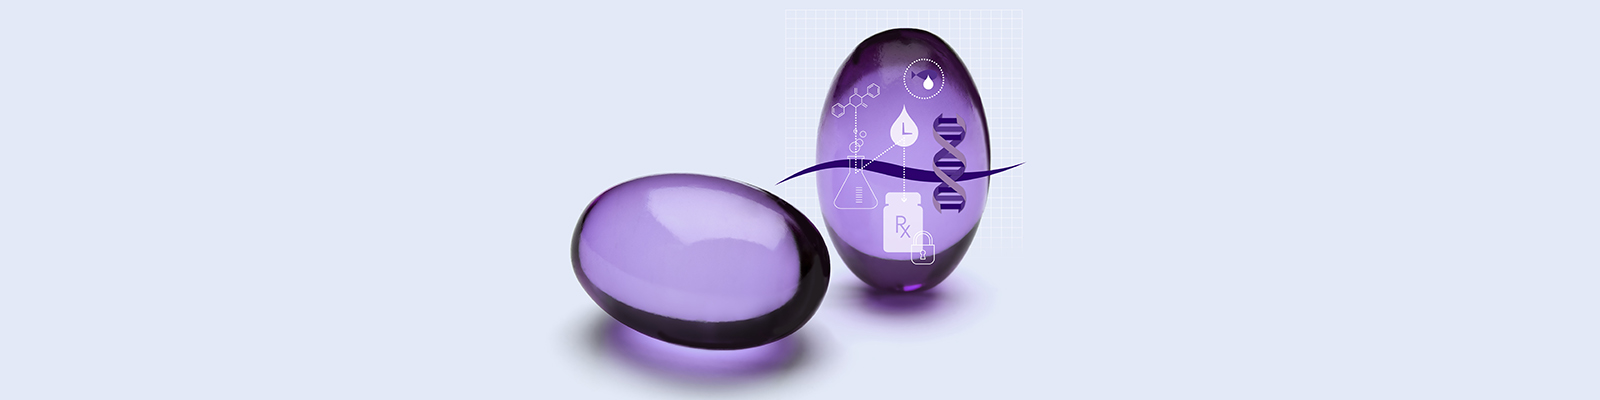 purple softgel pill